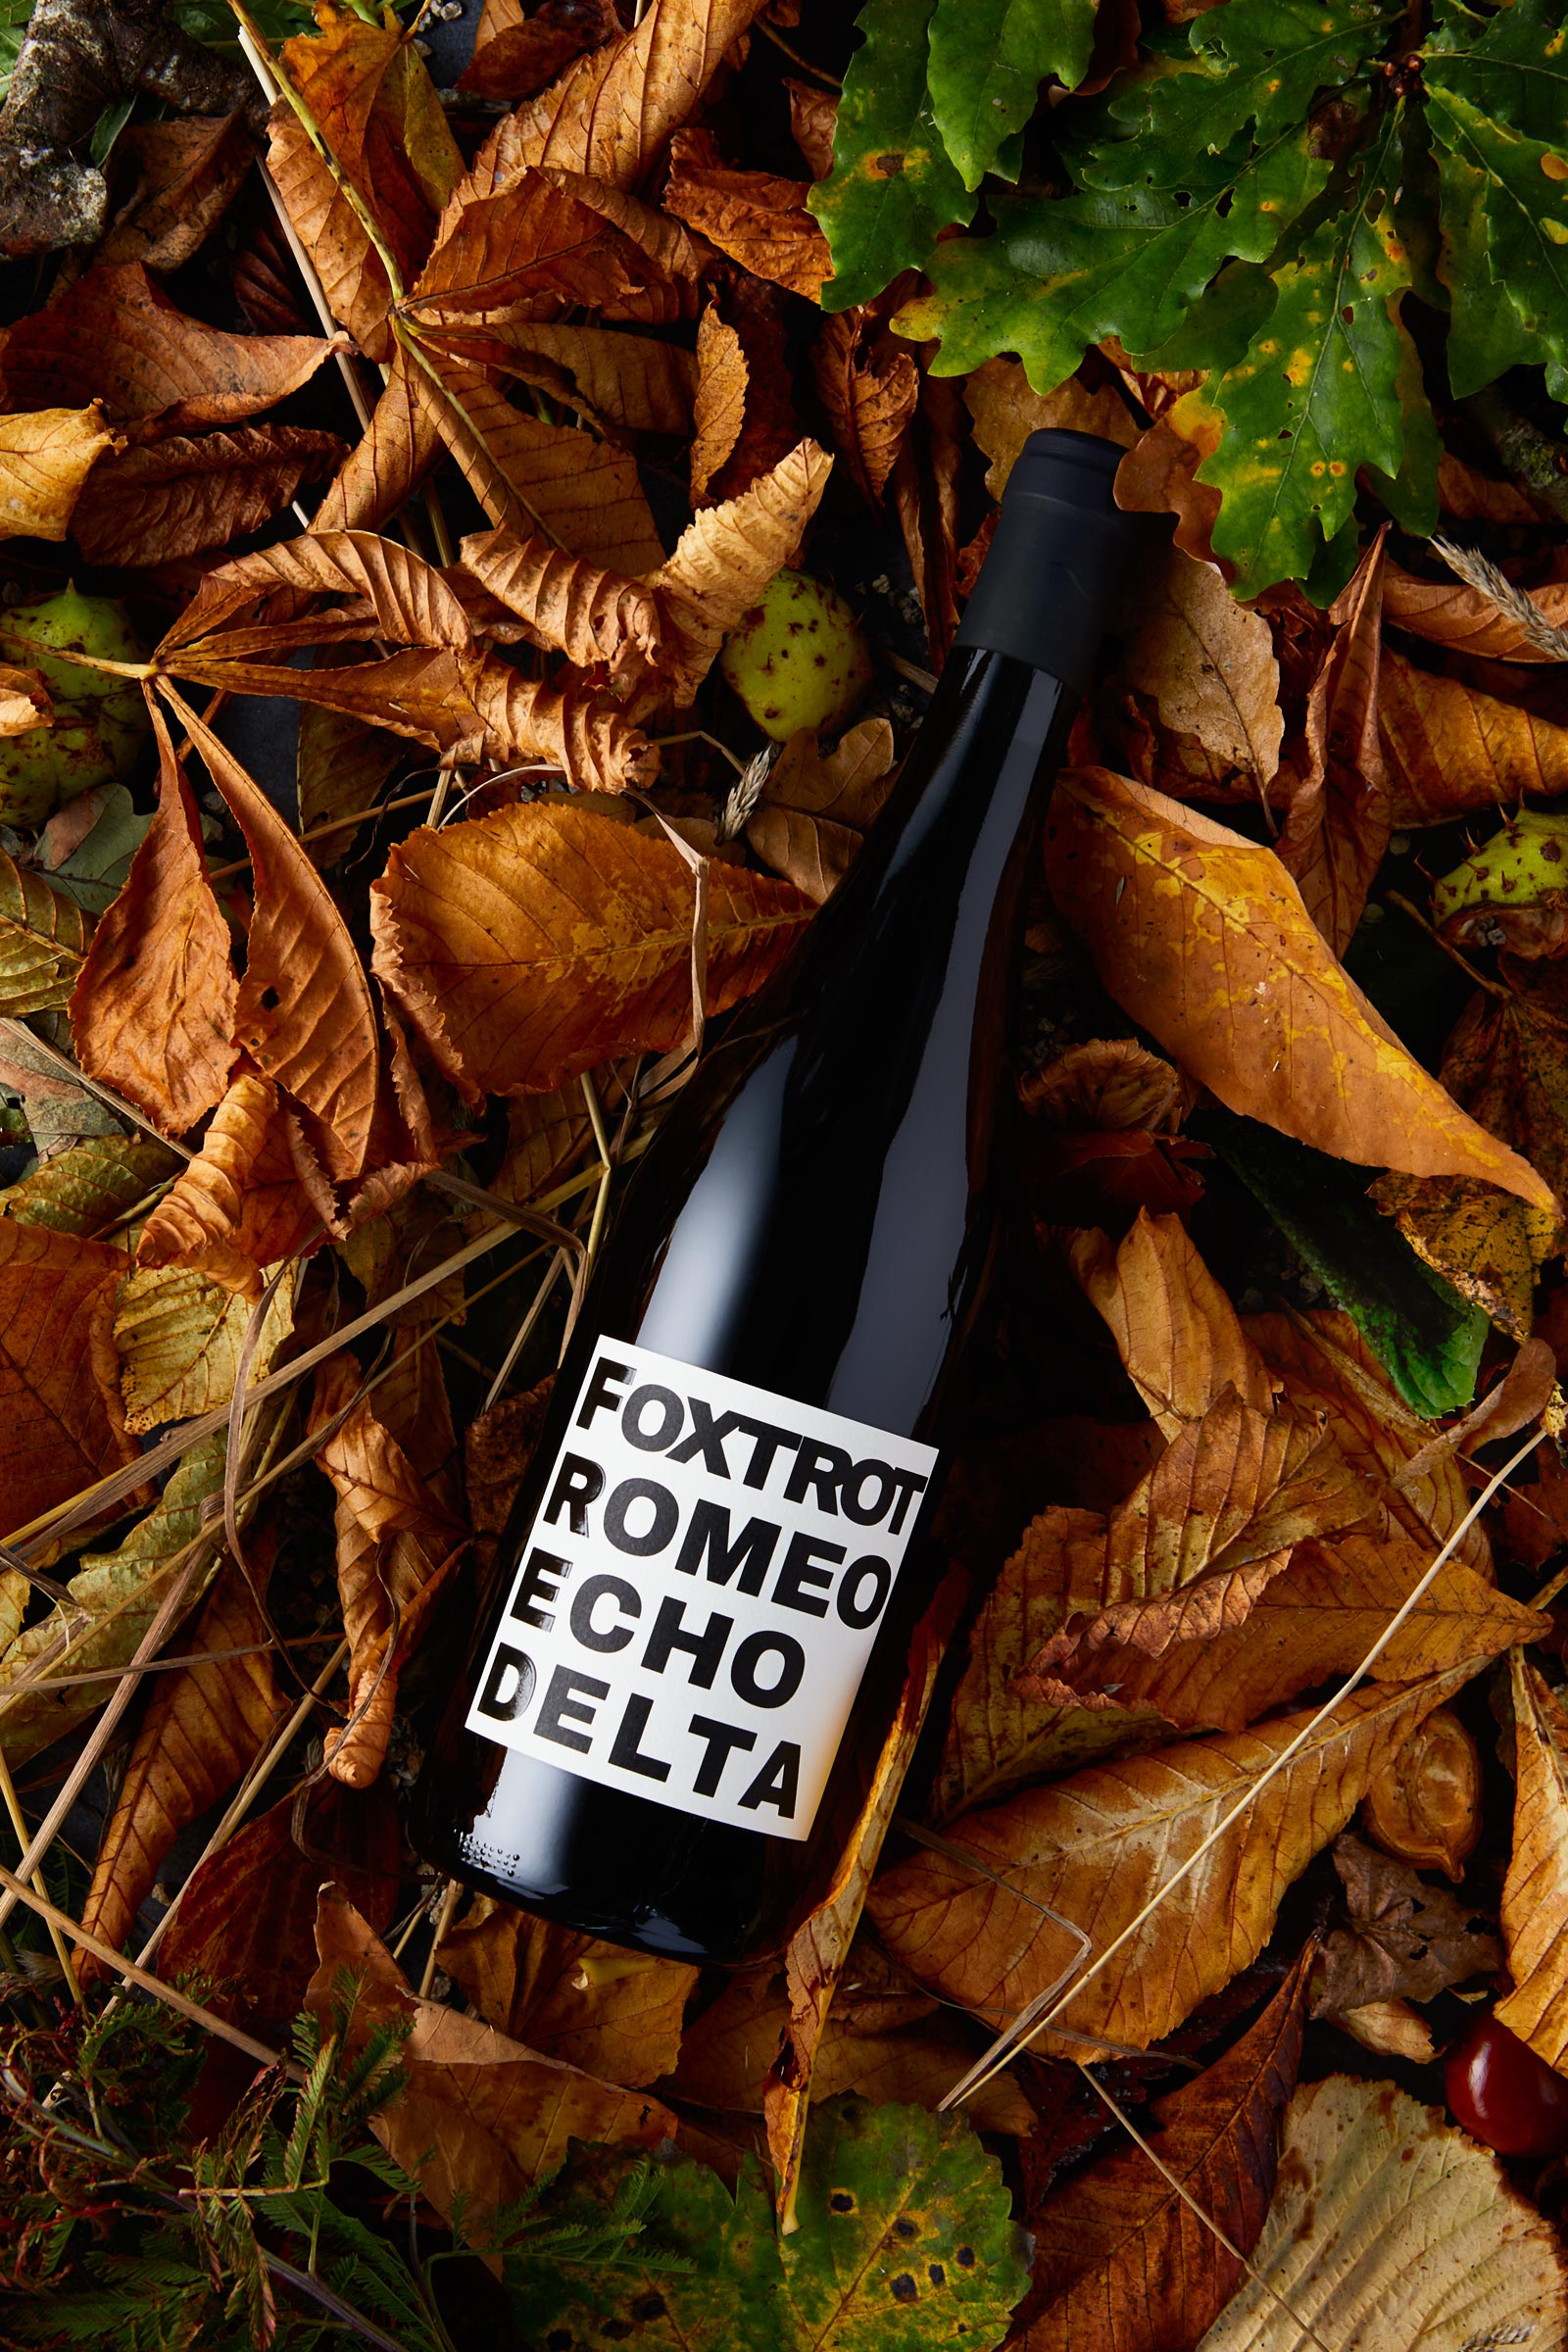 Foxtrot Romeo Echo Delta Red Wine at De Burgh Wine Merchants, Edinburgh food and drink photographer.